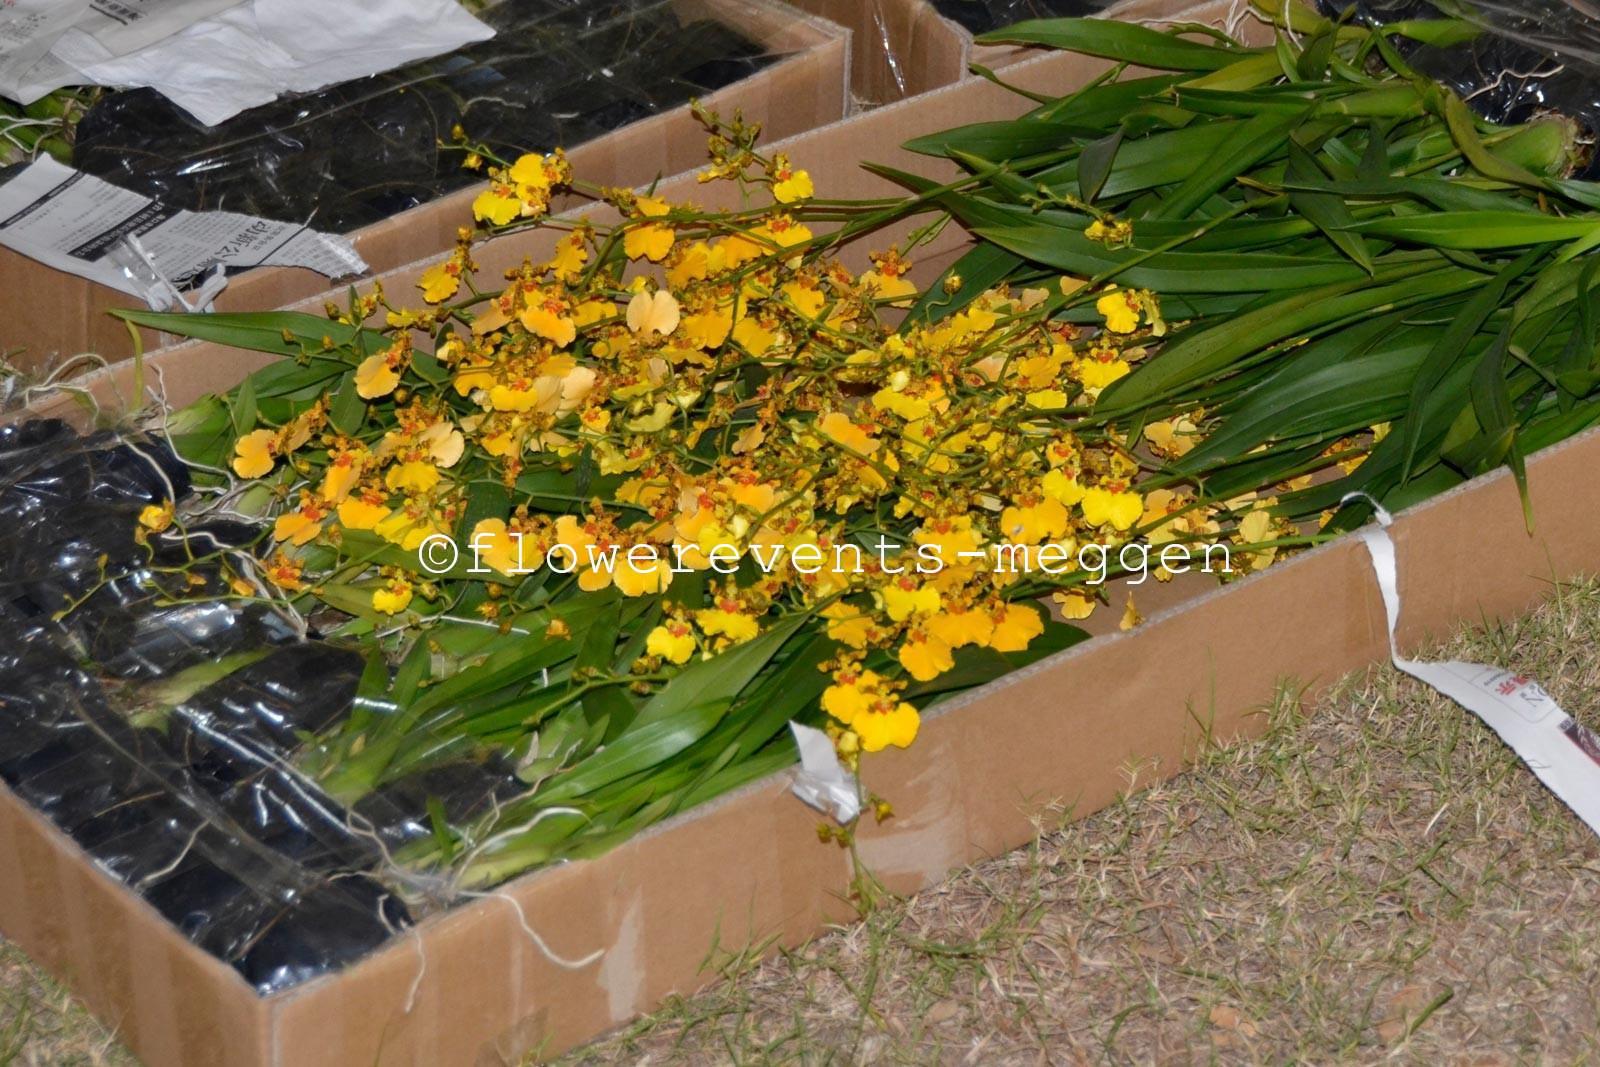 Oncidium plants from Thailand